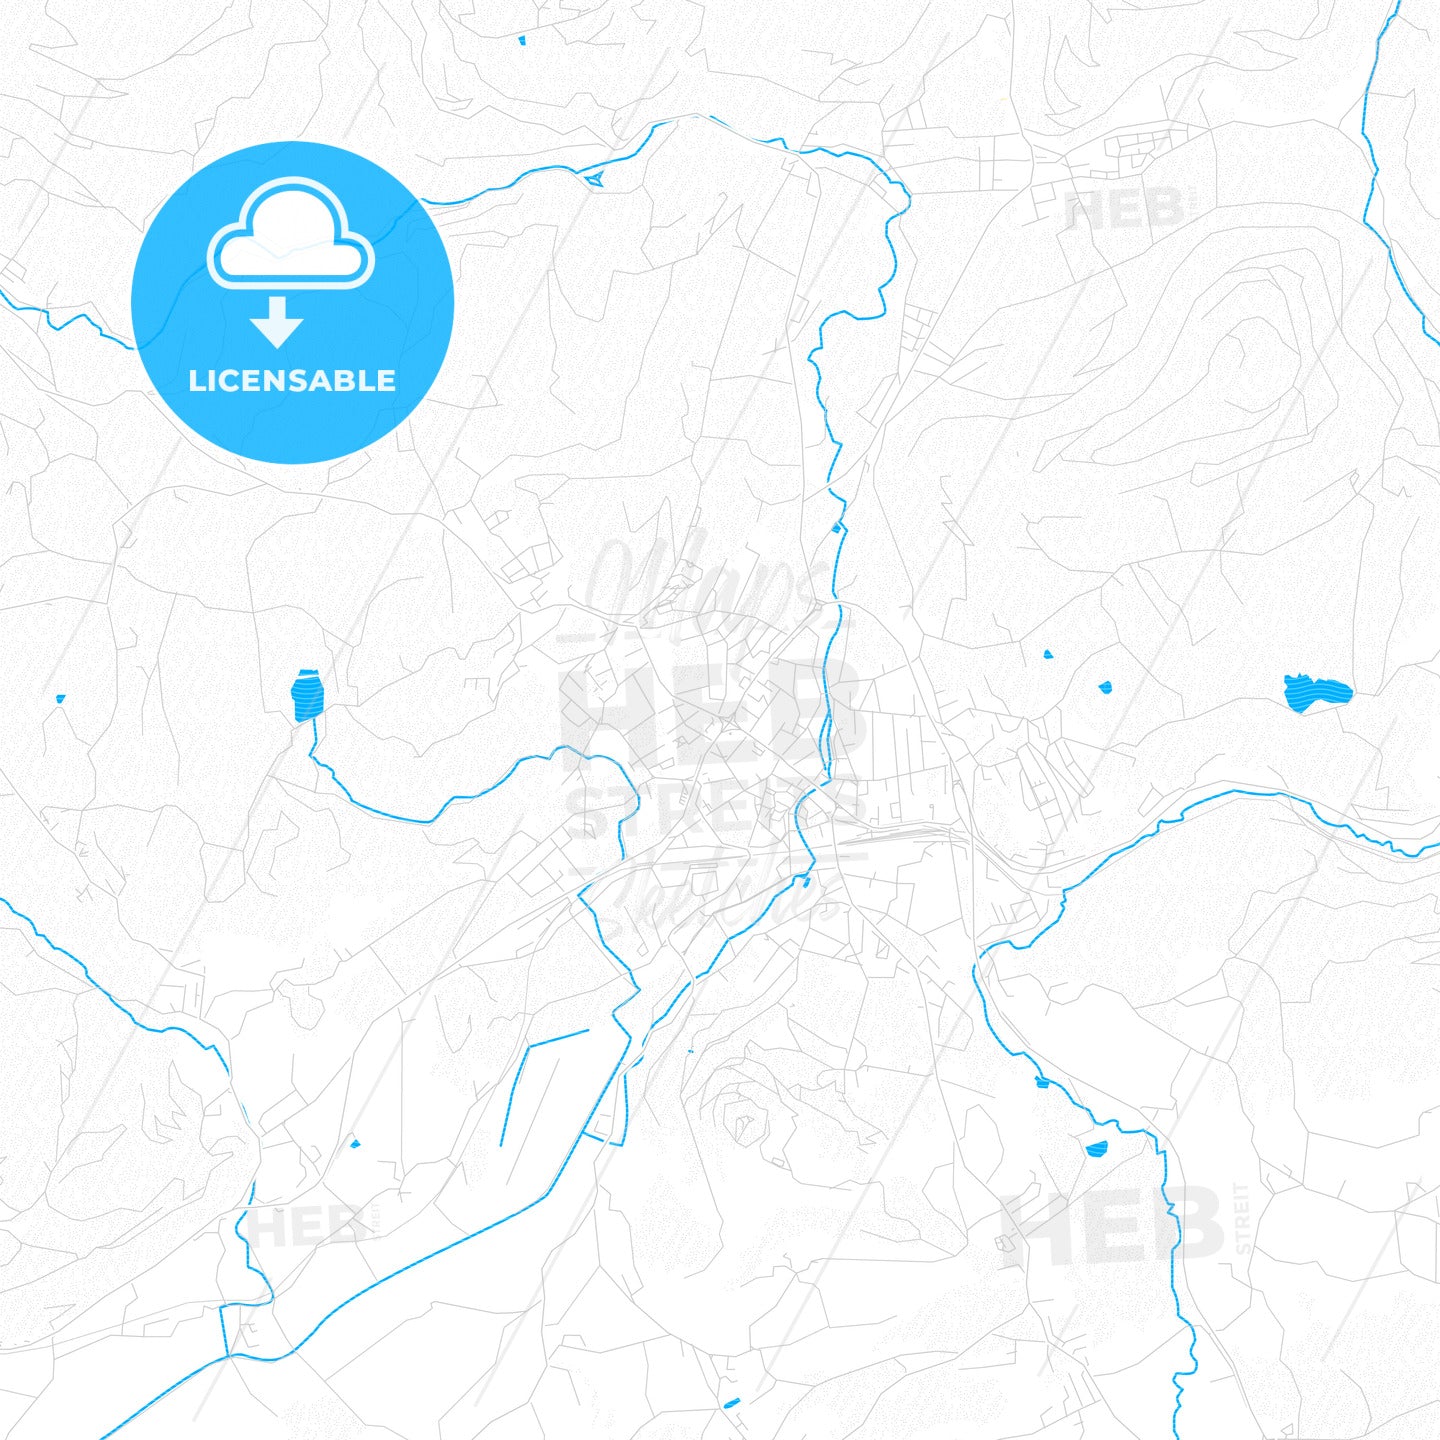 Feldkirchen, Austria PDF vector map with water in focus